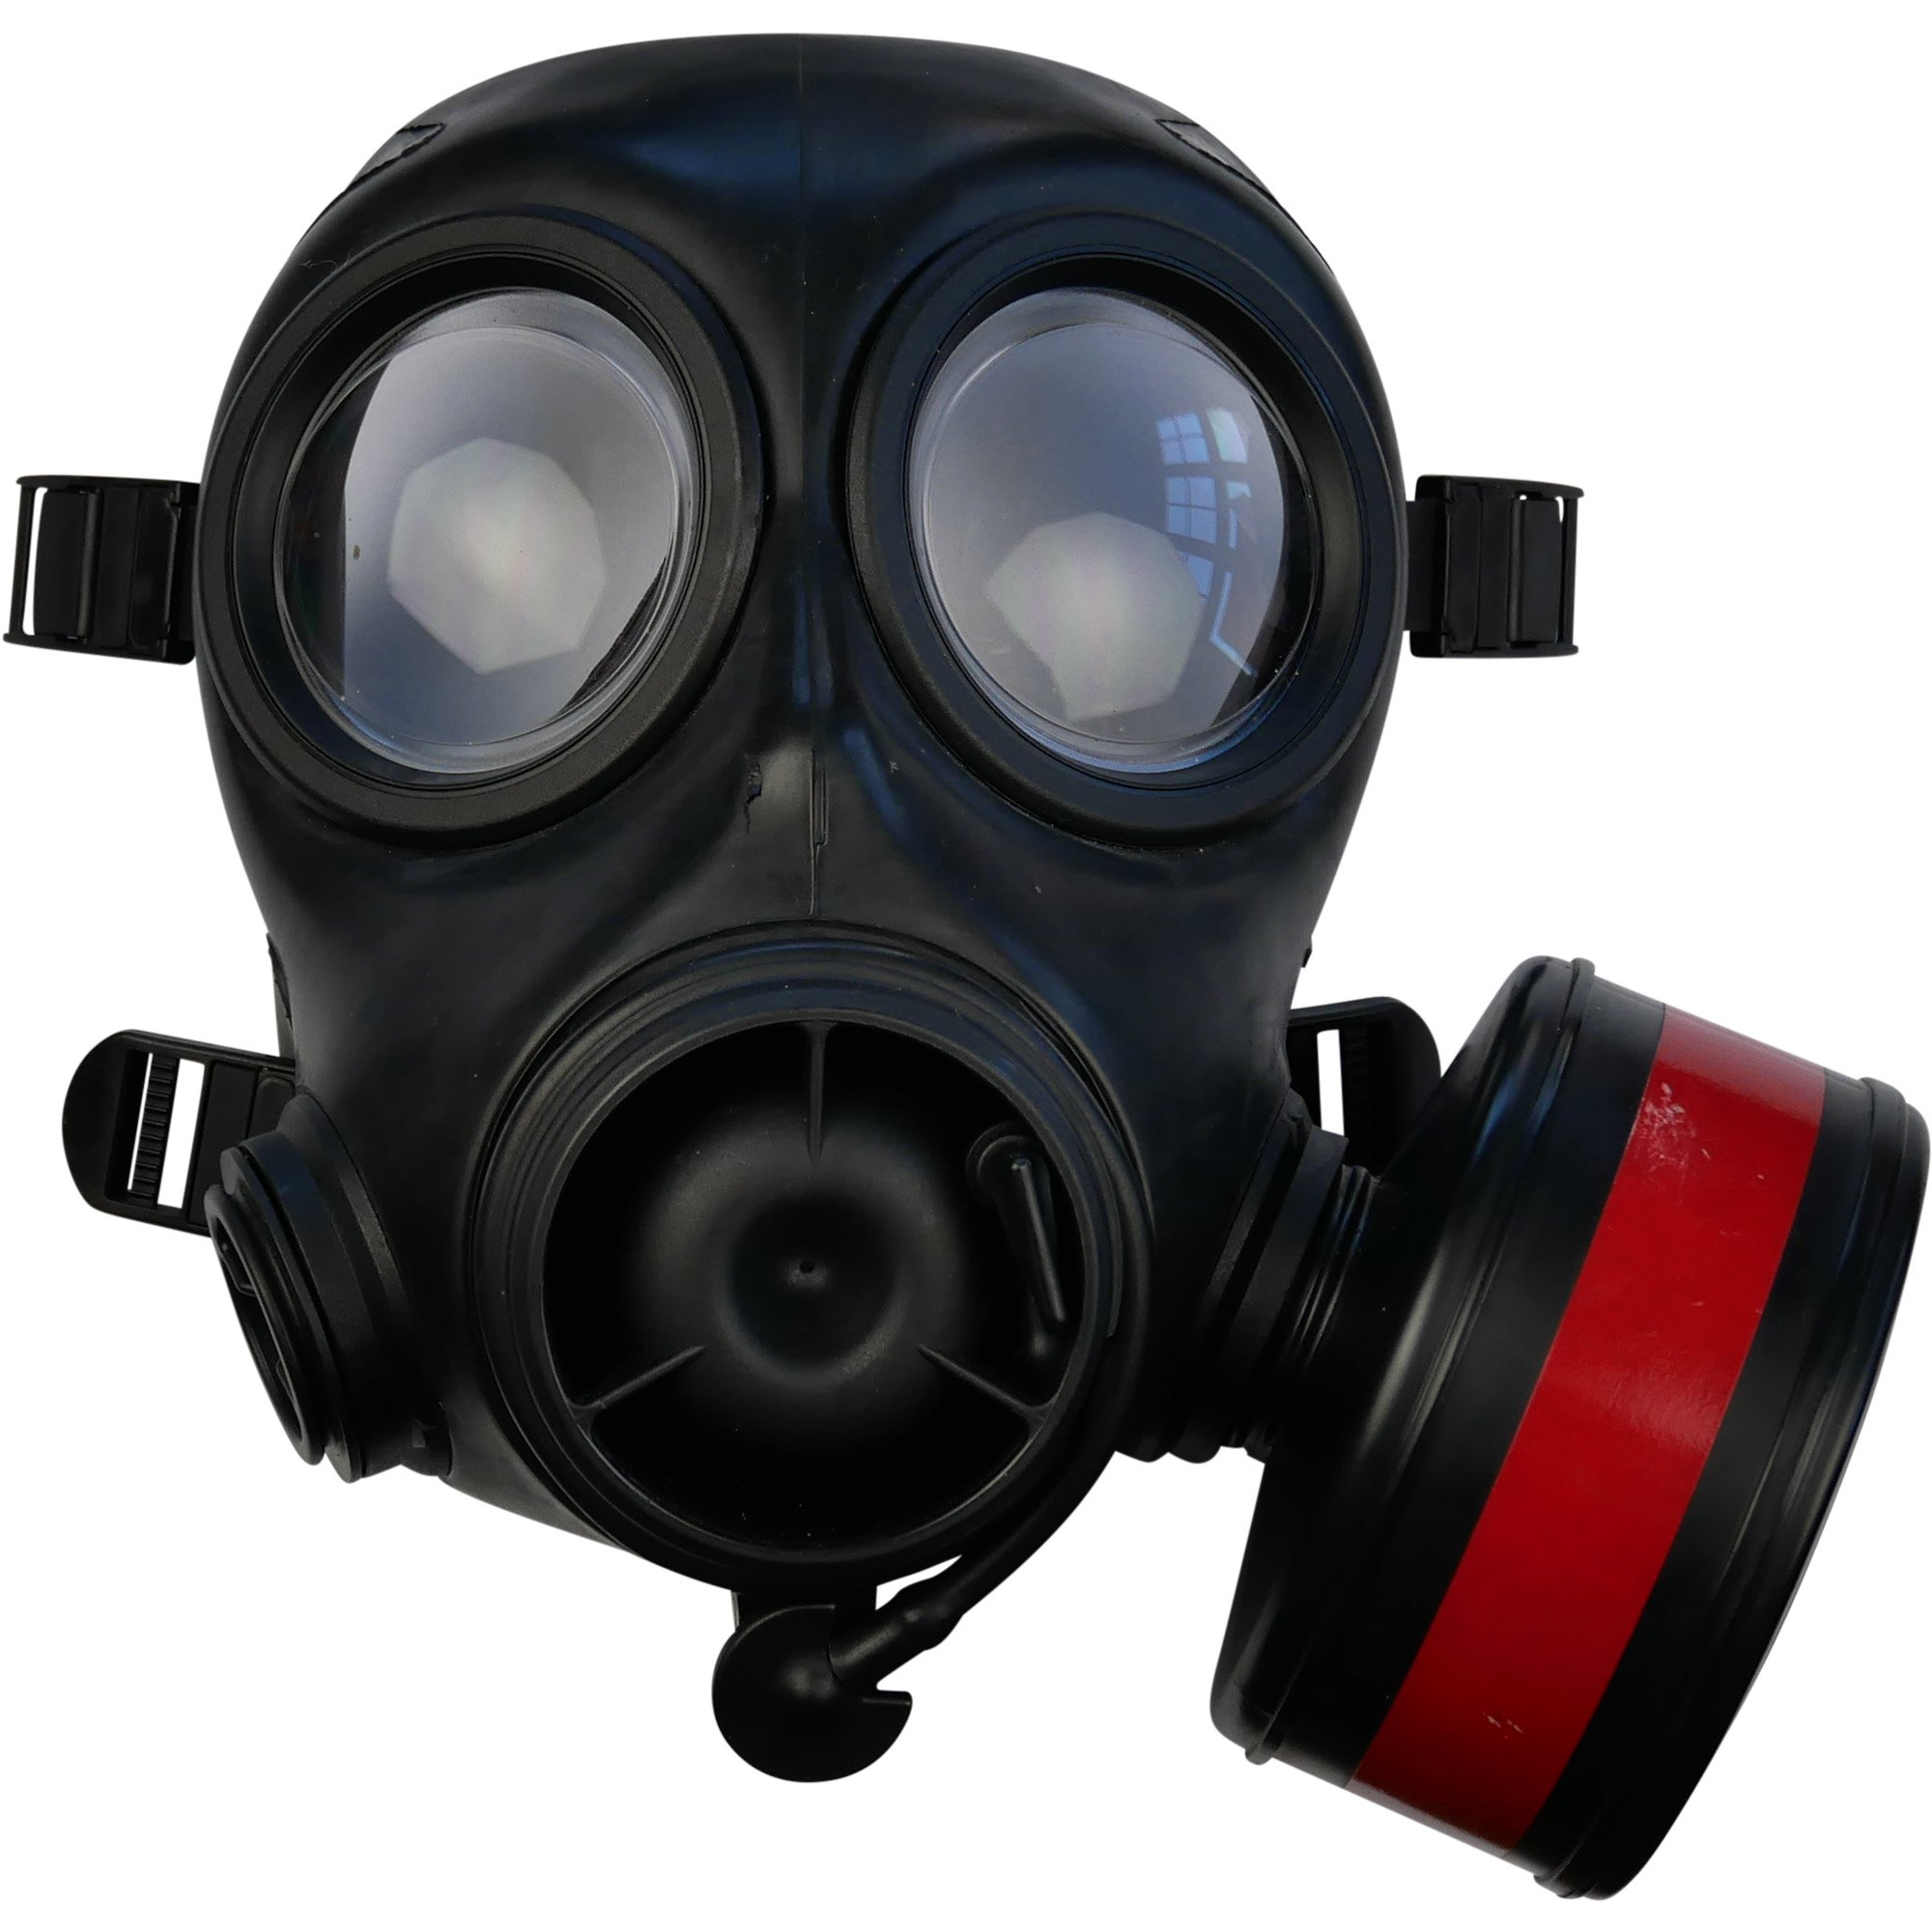 Buy Avon S10 Nbc Respirator Gas Mask - army surplus | X Military Store